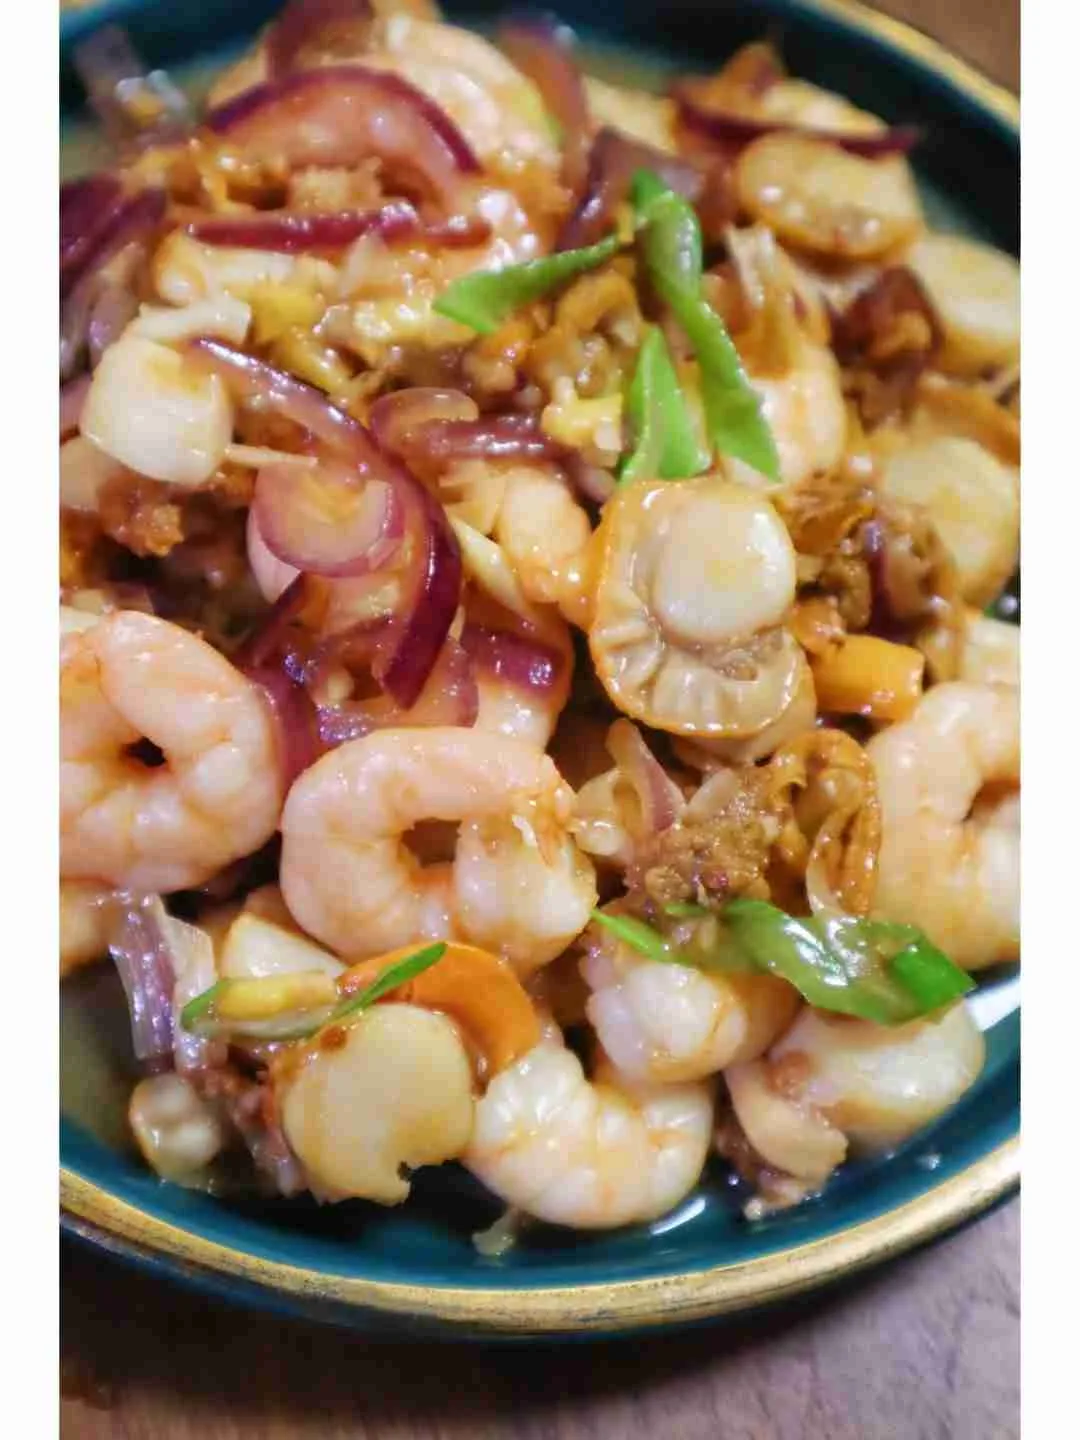 shrimp and scallop recipes healthy